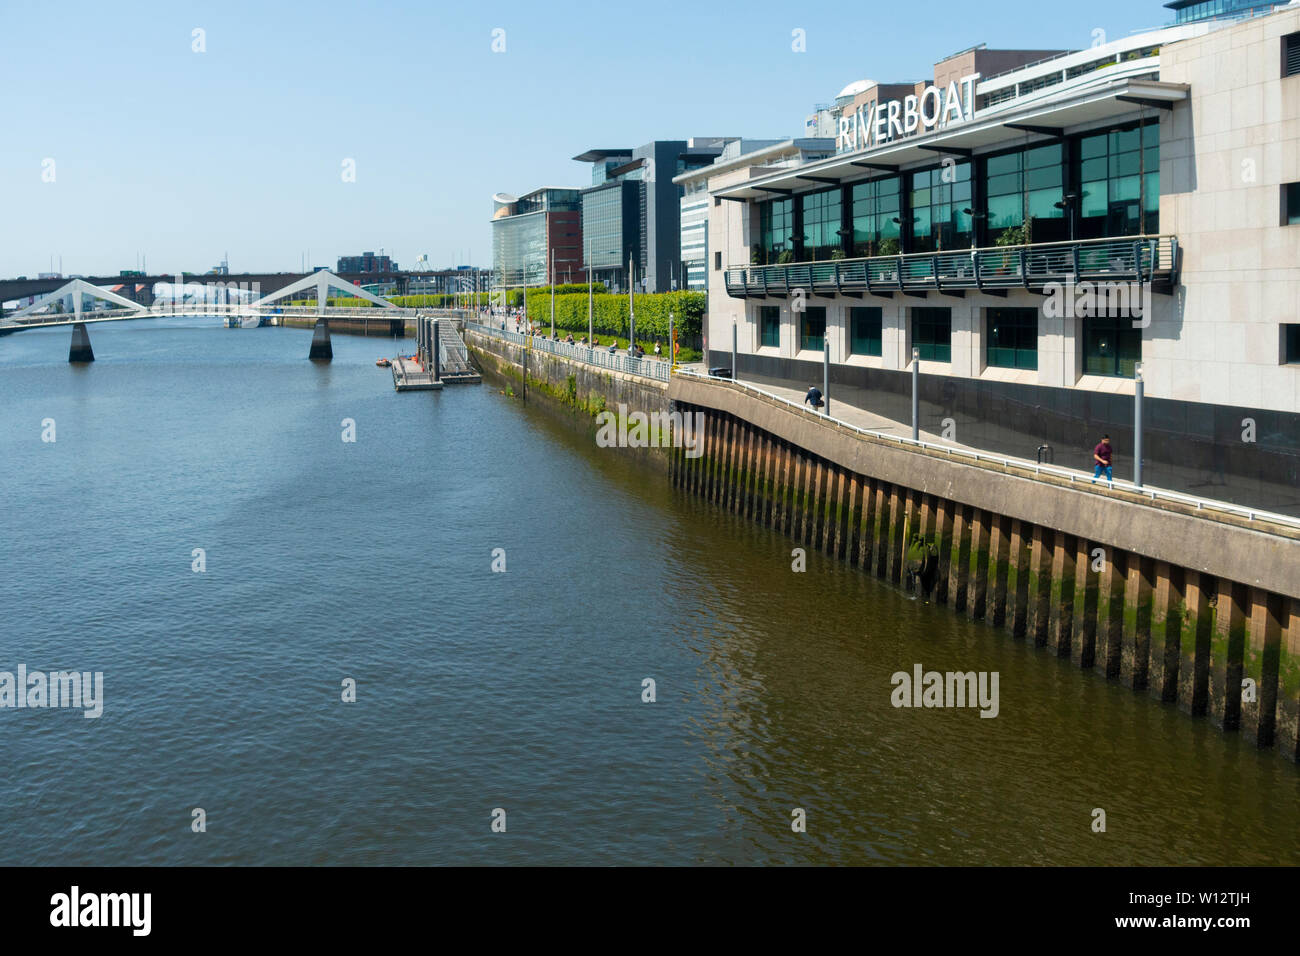 La rivière Clyde dans le centre de Glasgow, en Écosse. Squiggly, Broomielaw Bridge, Grosvenor Casino Riverboat, Clyde walkway, Banque D'Images